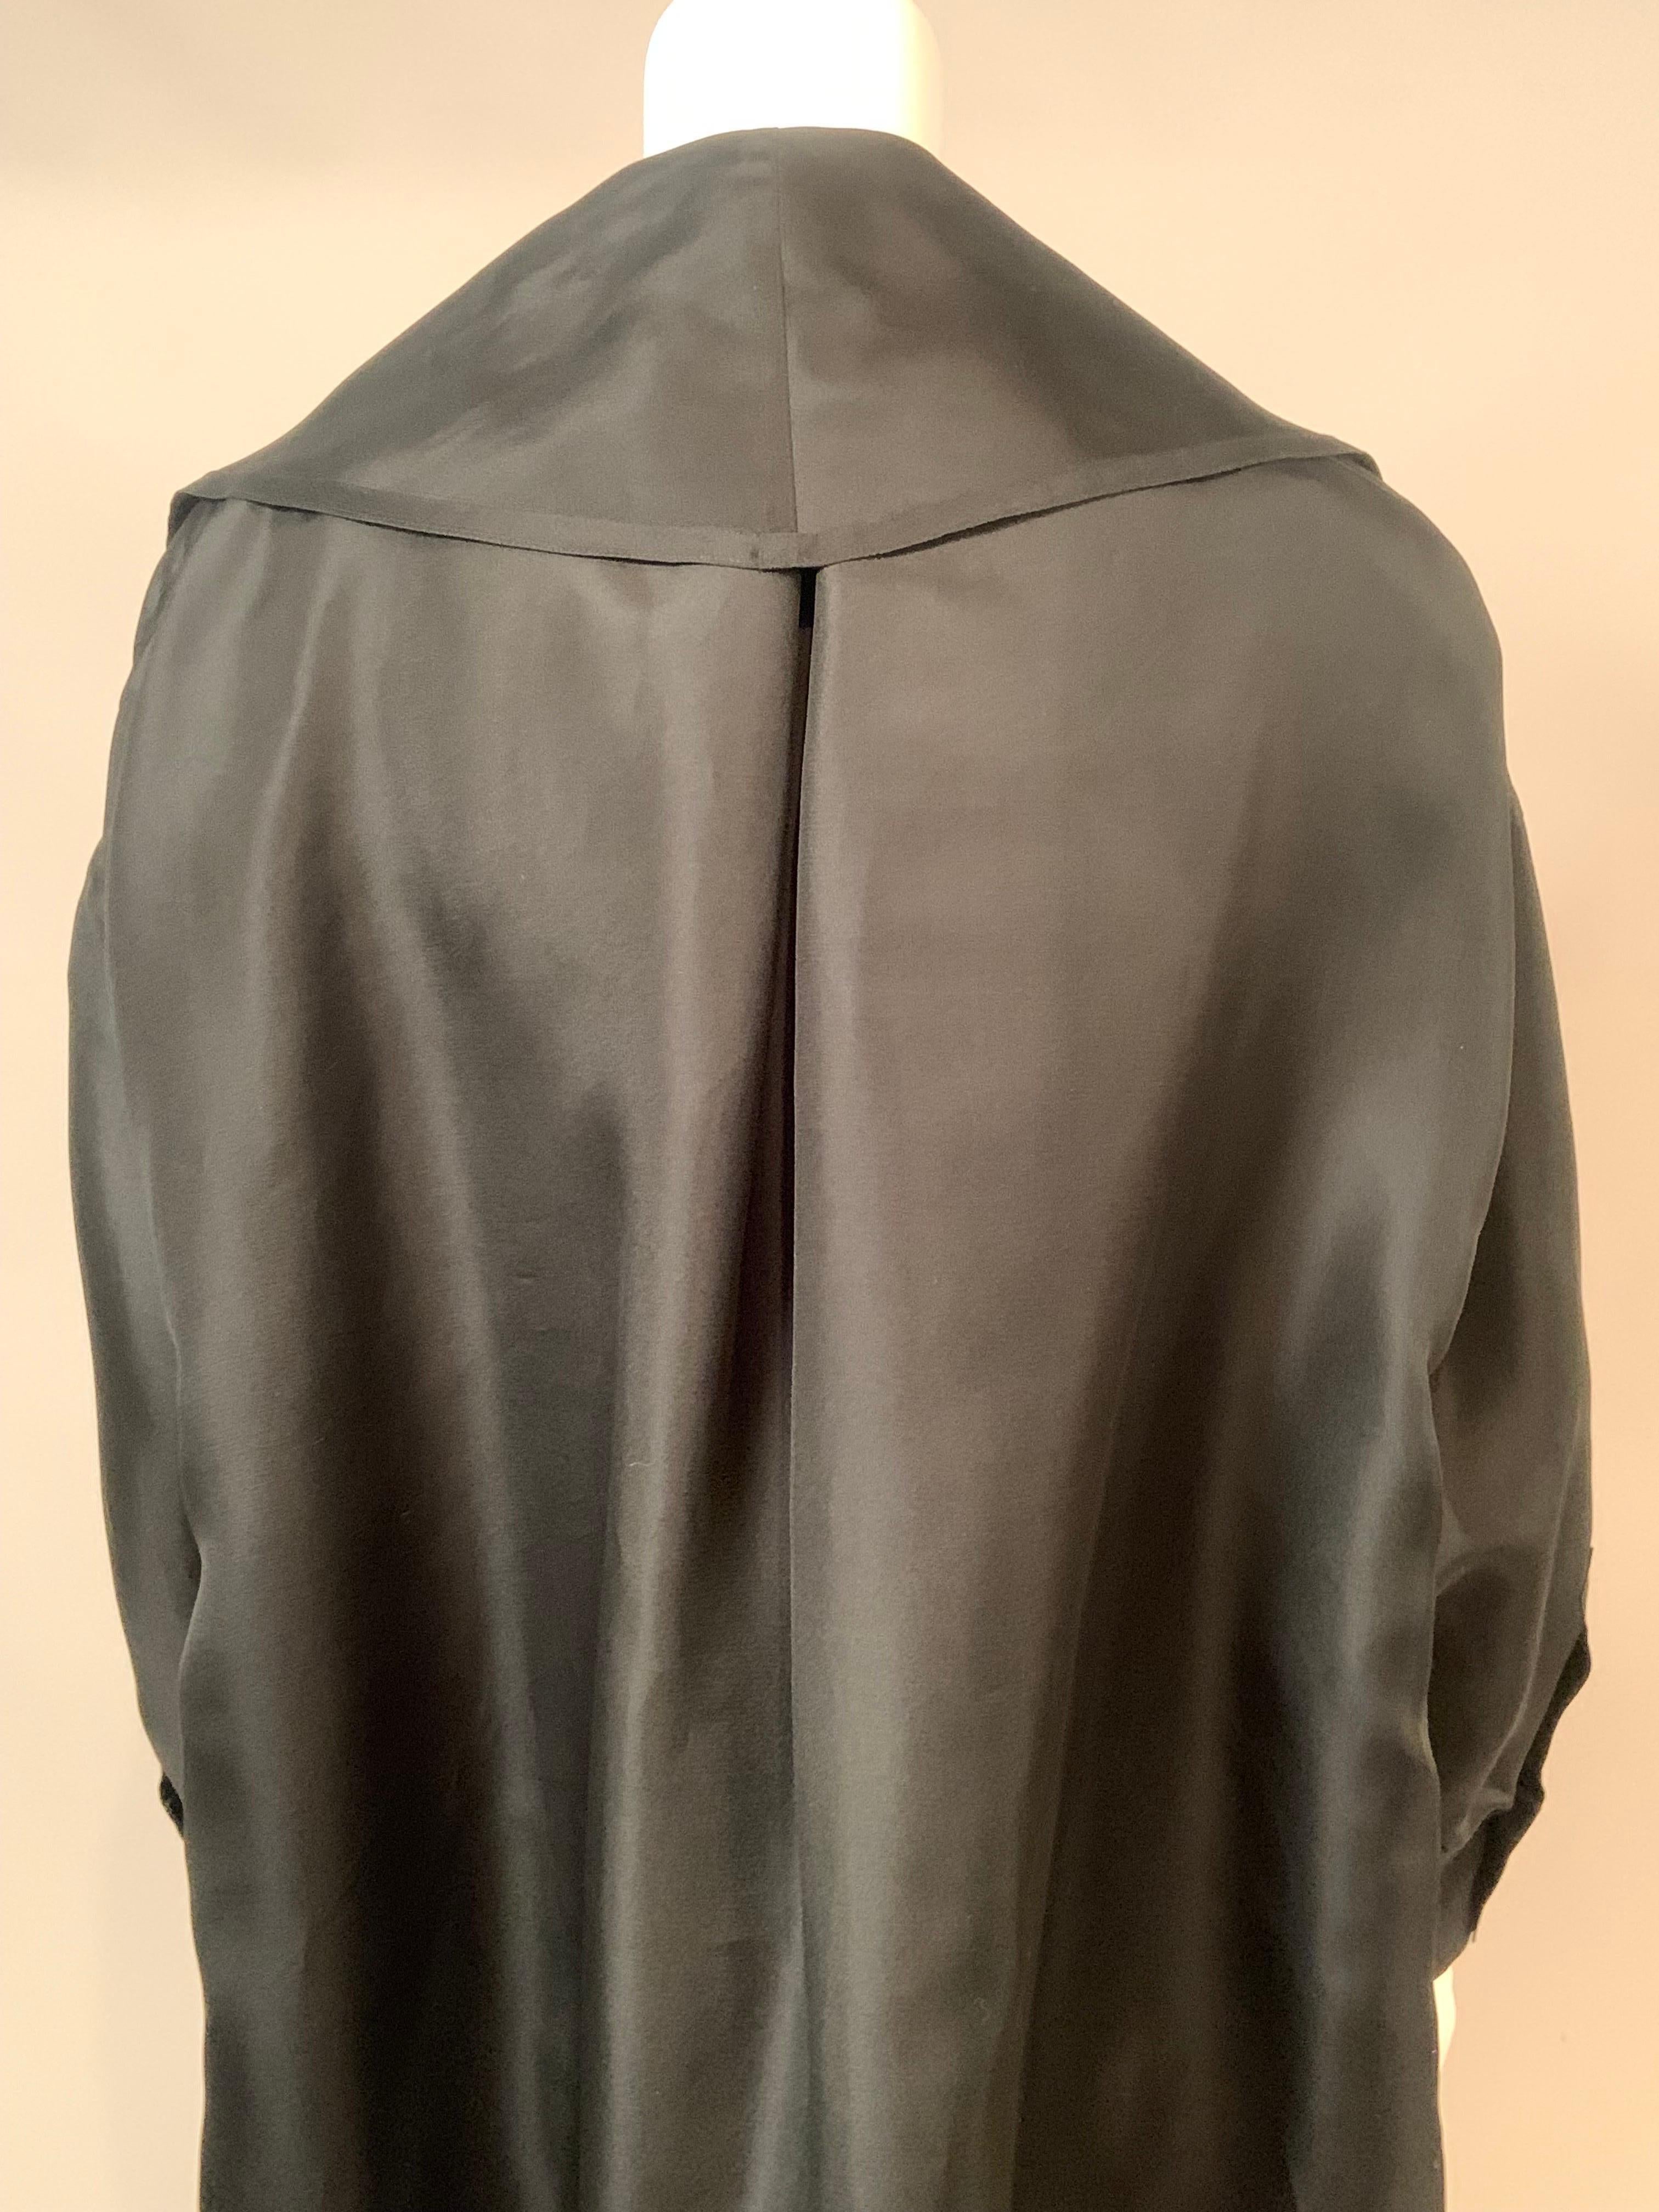 Salvatore Ferragamo Sheer Black Silk Duster Coat, New With Tags 3